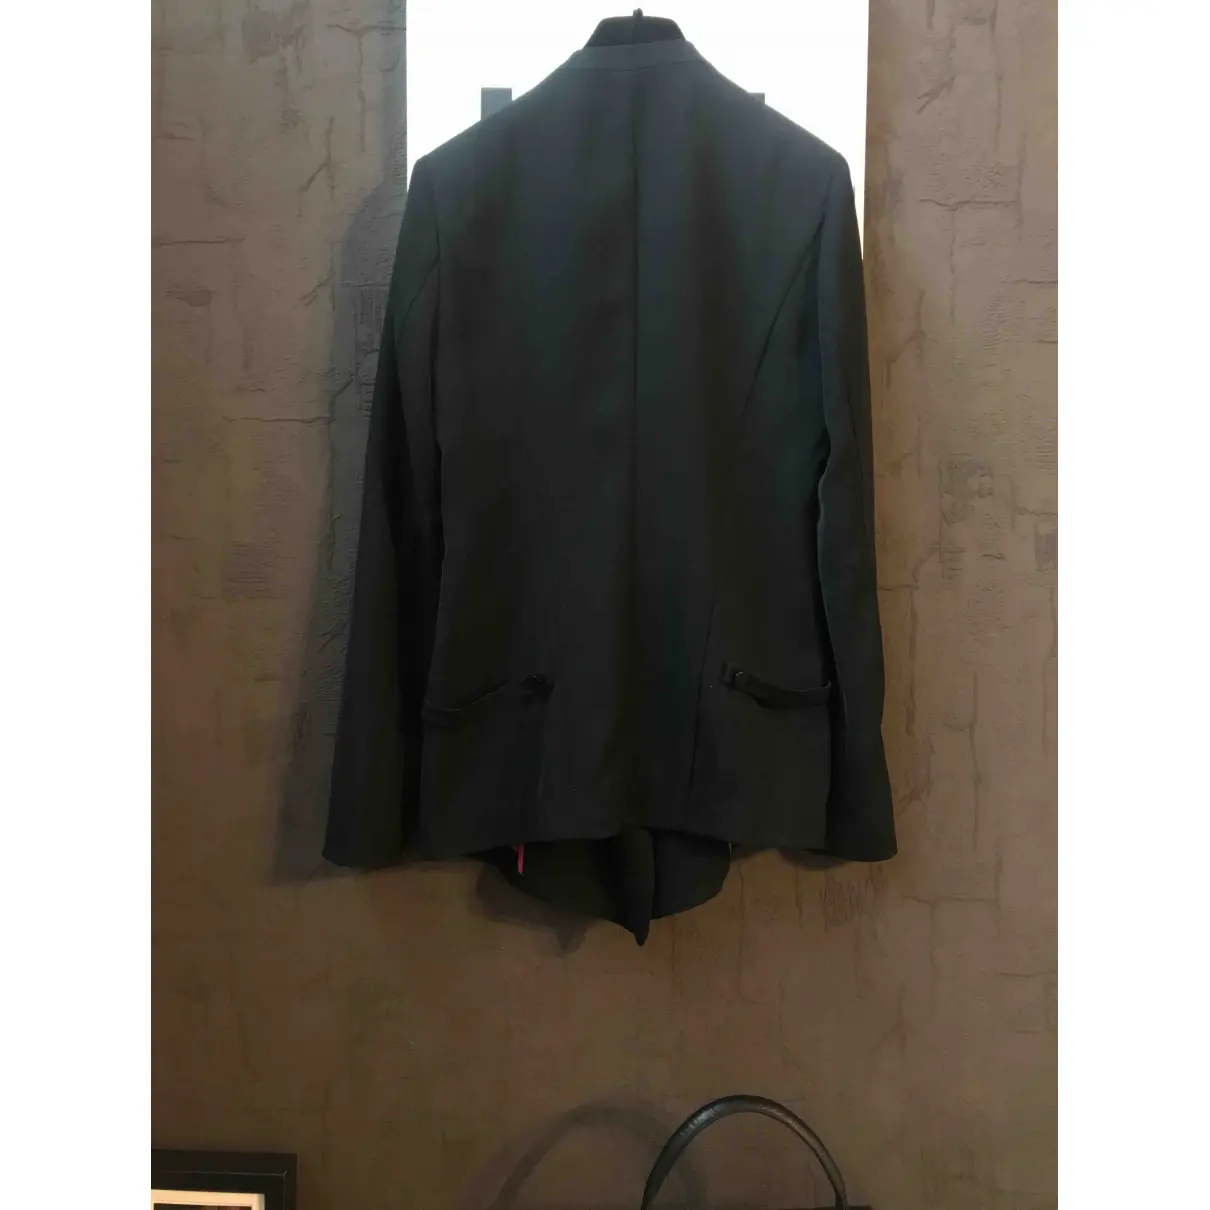 Buy Alexander Wang Black Polyester Jacket online